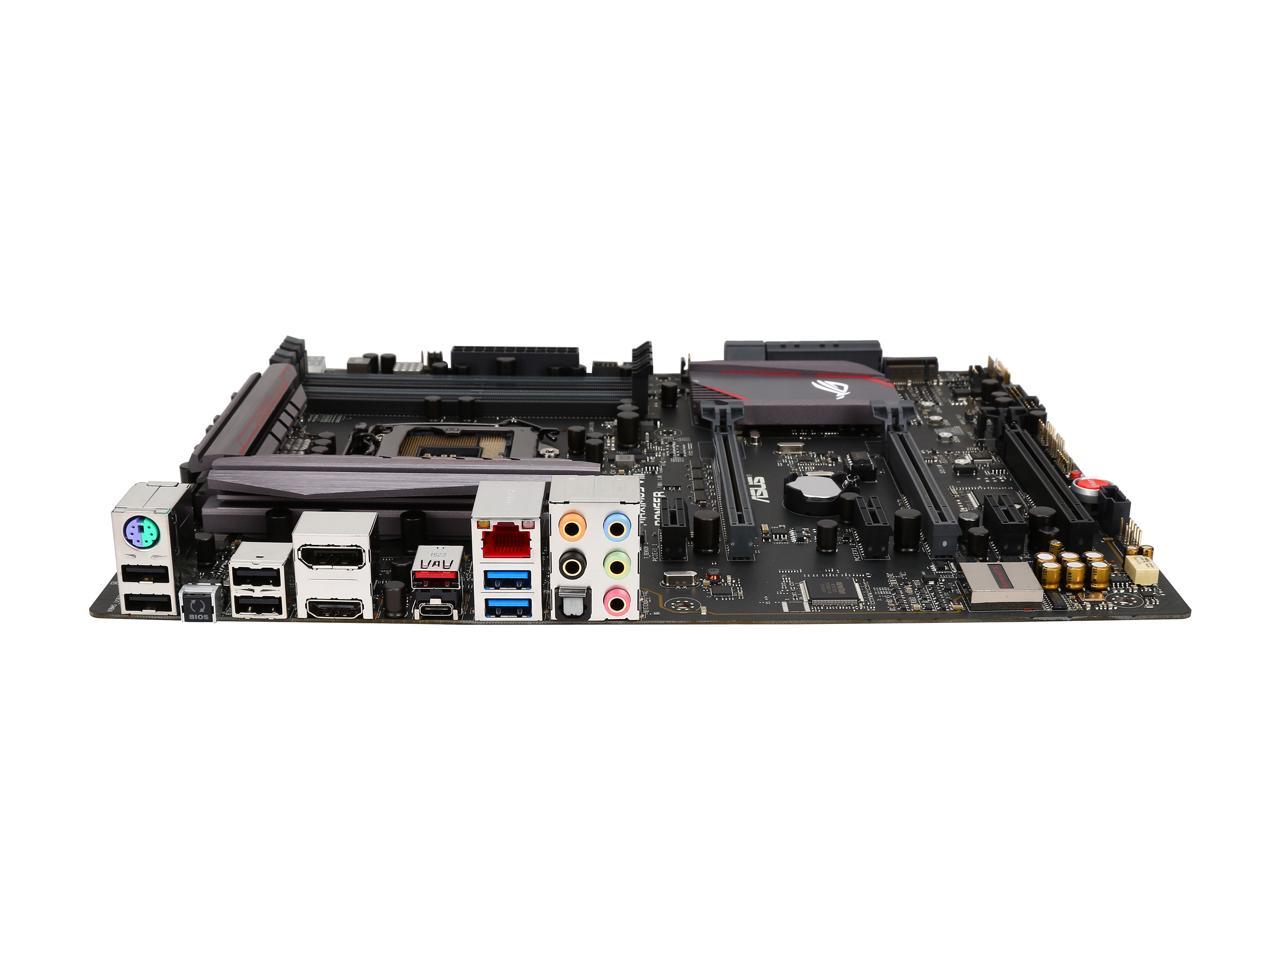 ASUS ROG MAXIMUS VIII RANGER LGA 1151 Intel Z170 HDMI SATA 6Gb/s USB 3.1 ATX Intel Motherboard